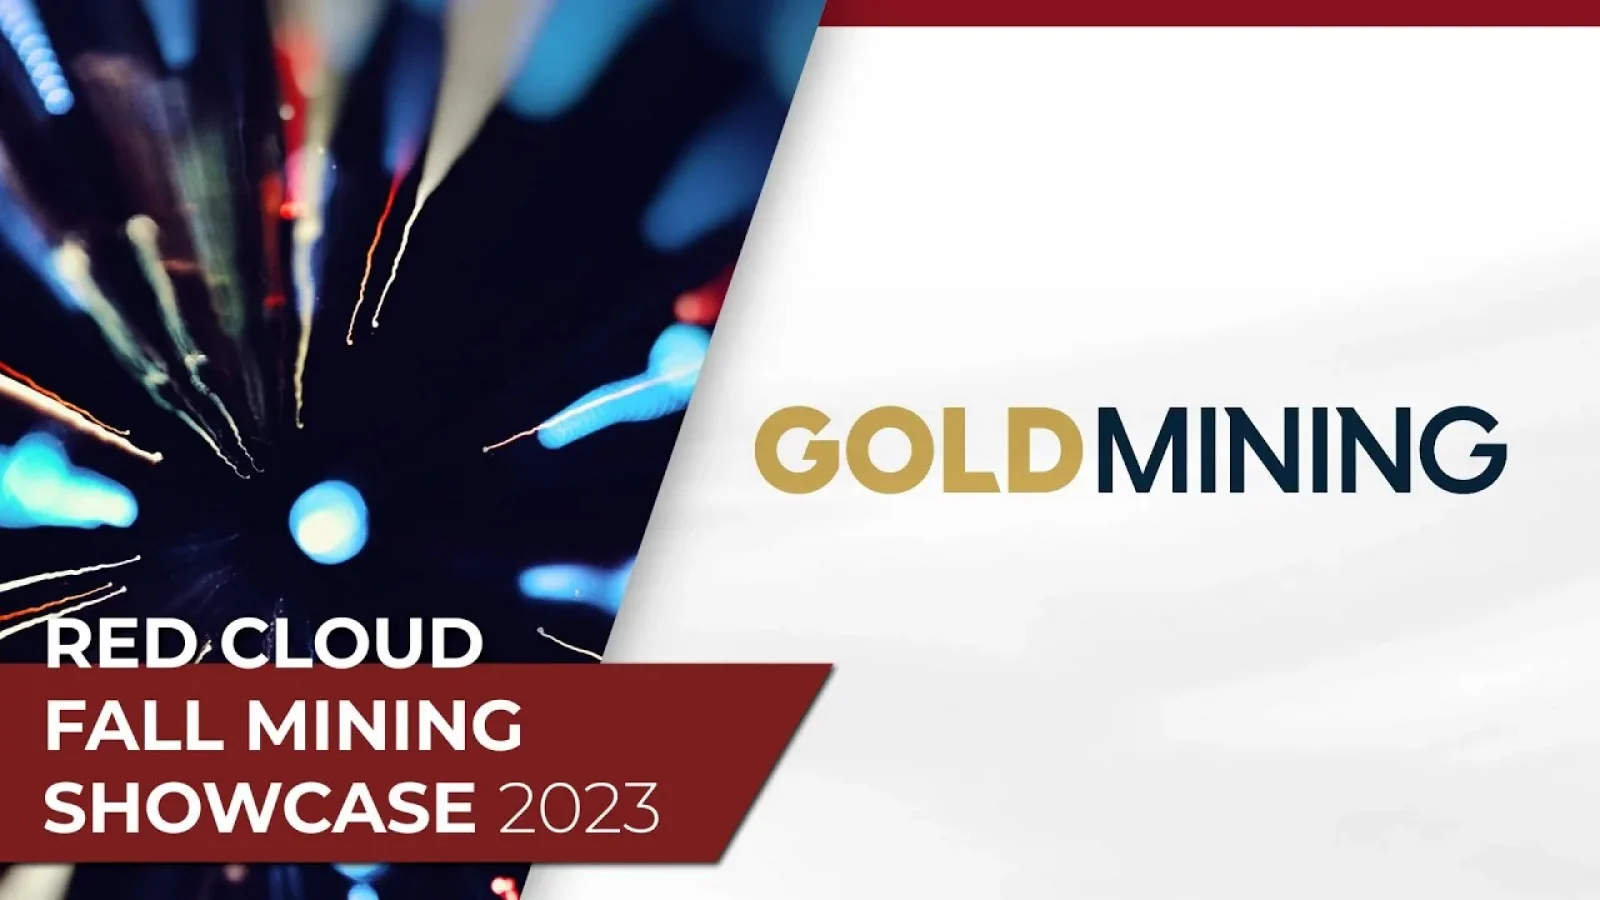 Gold mining FMS2023